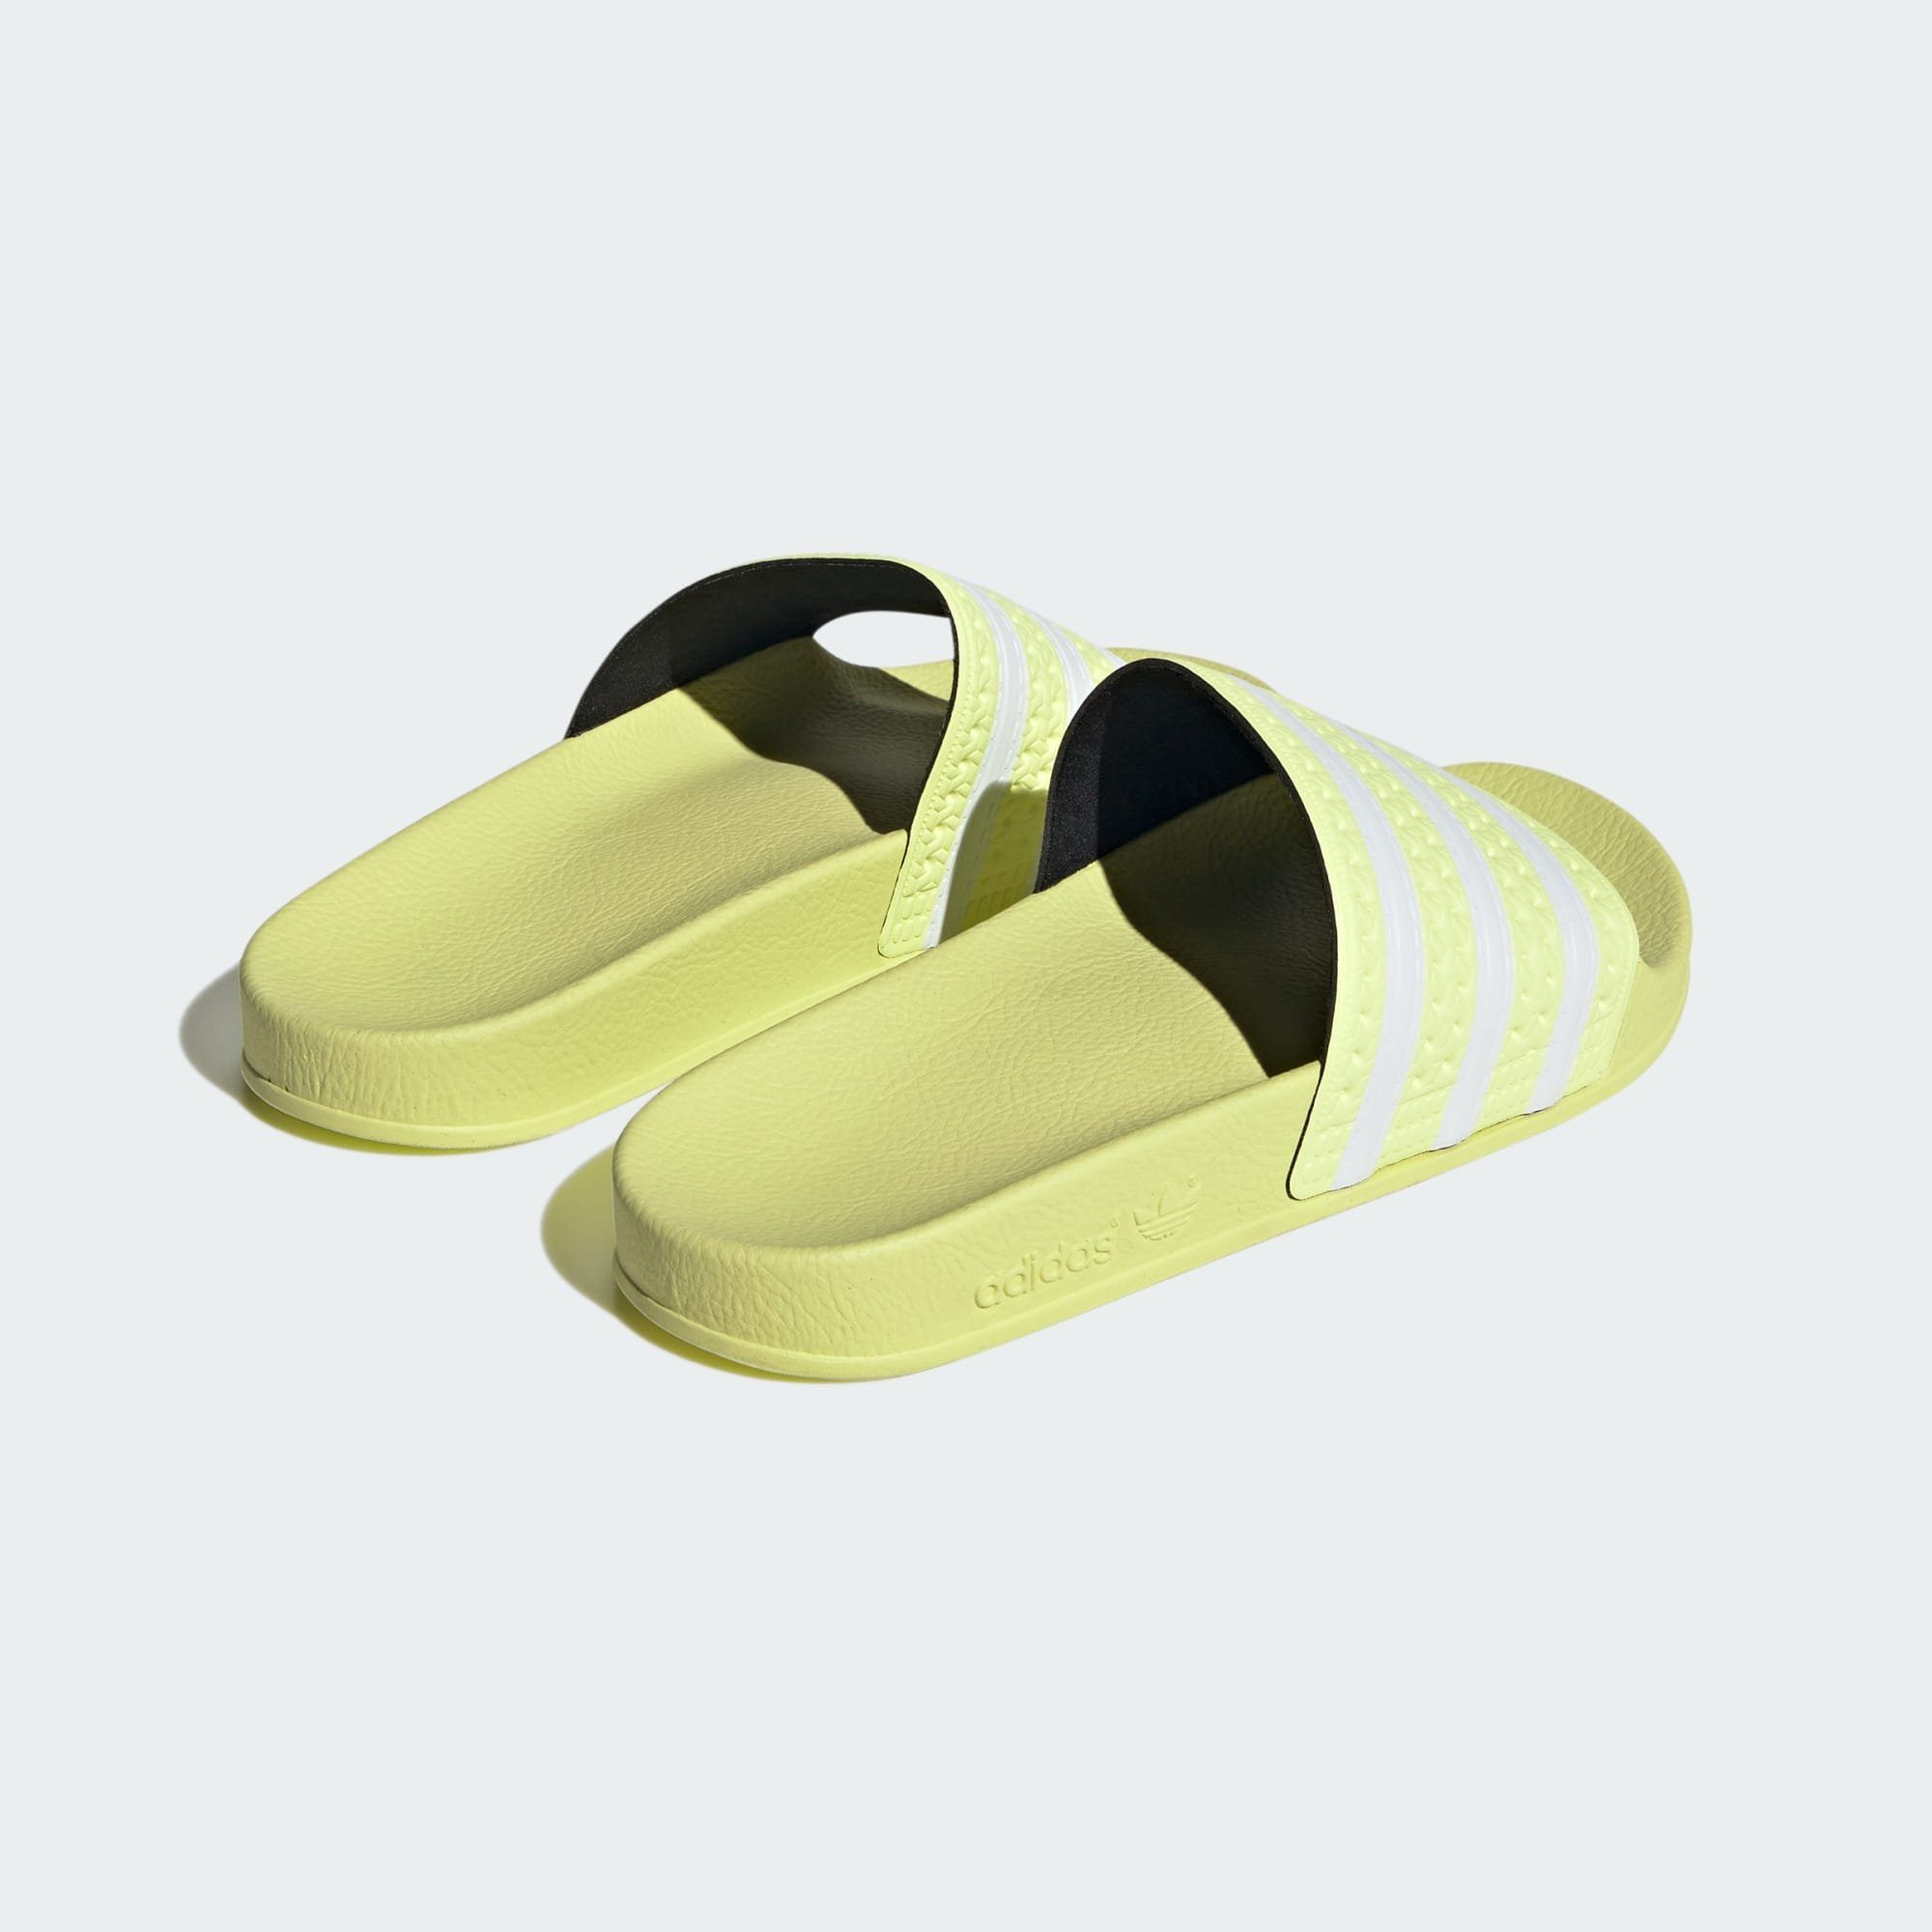 Pulse Pulse Originals / ADILETTE / Badesandale Yellow Yellow White adidas Cloud